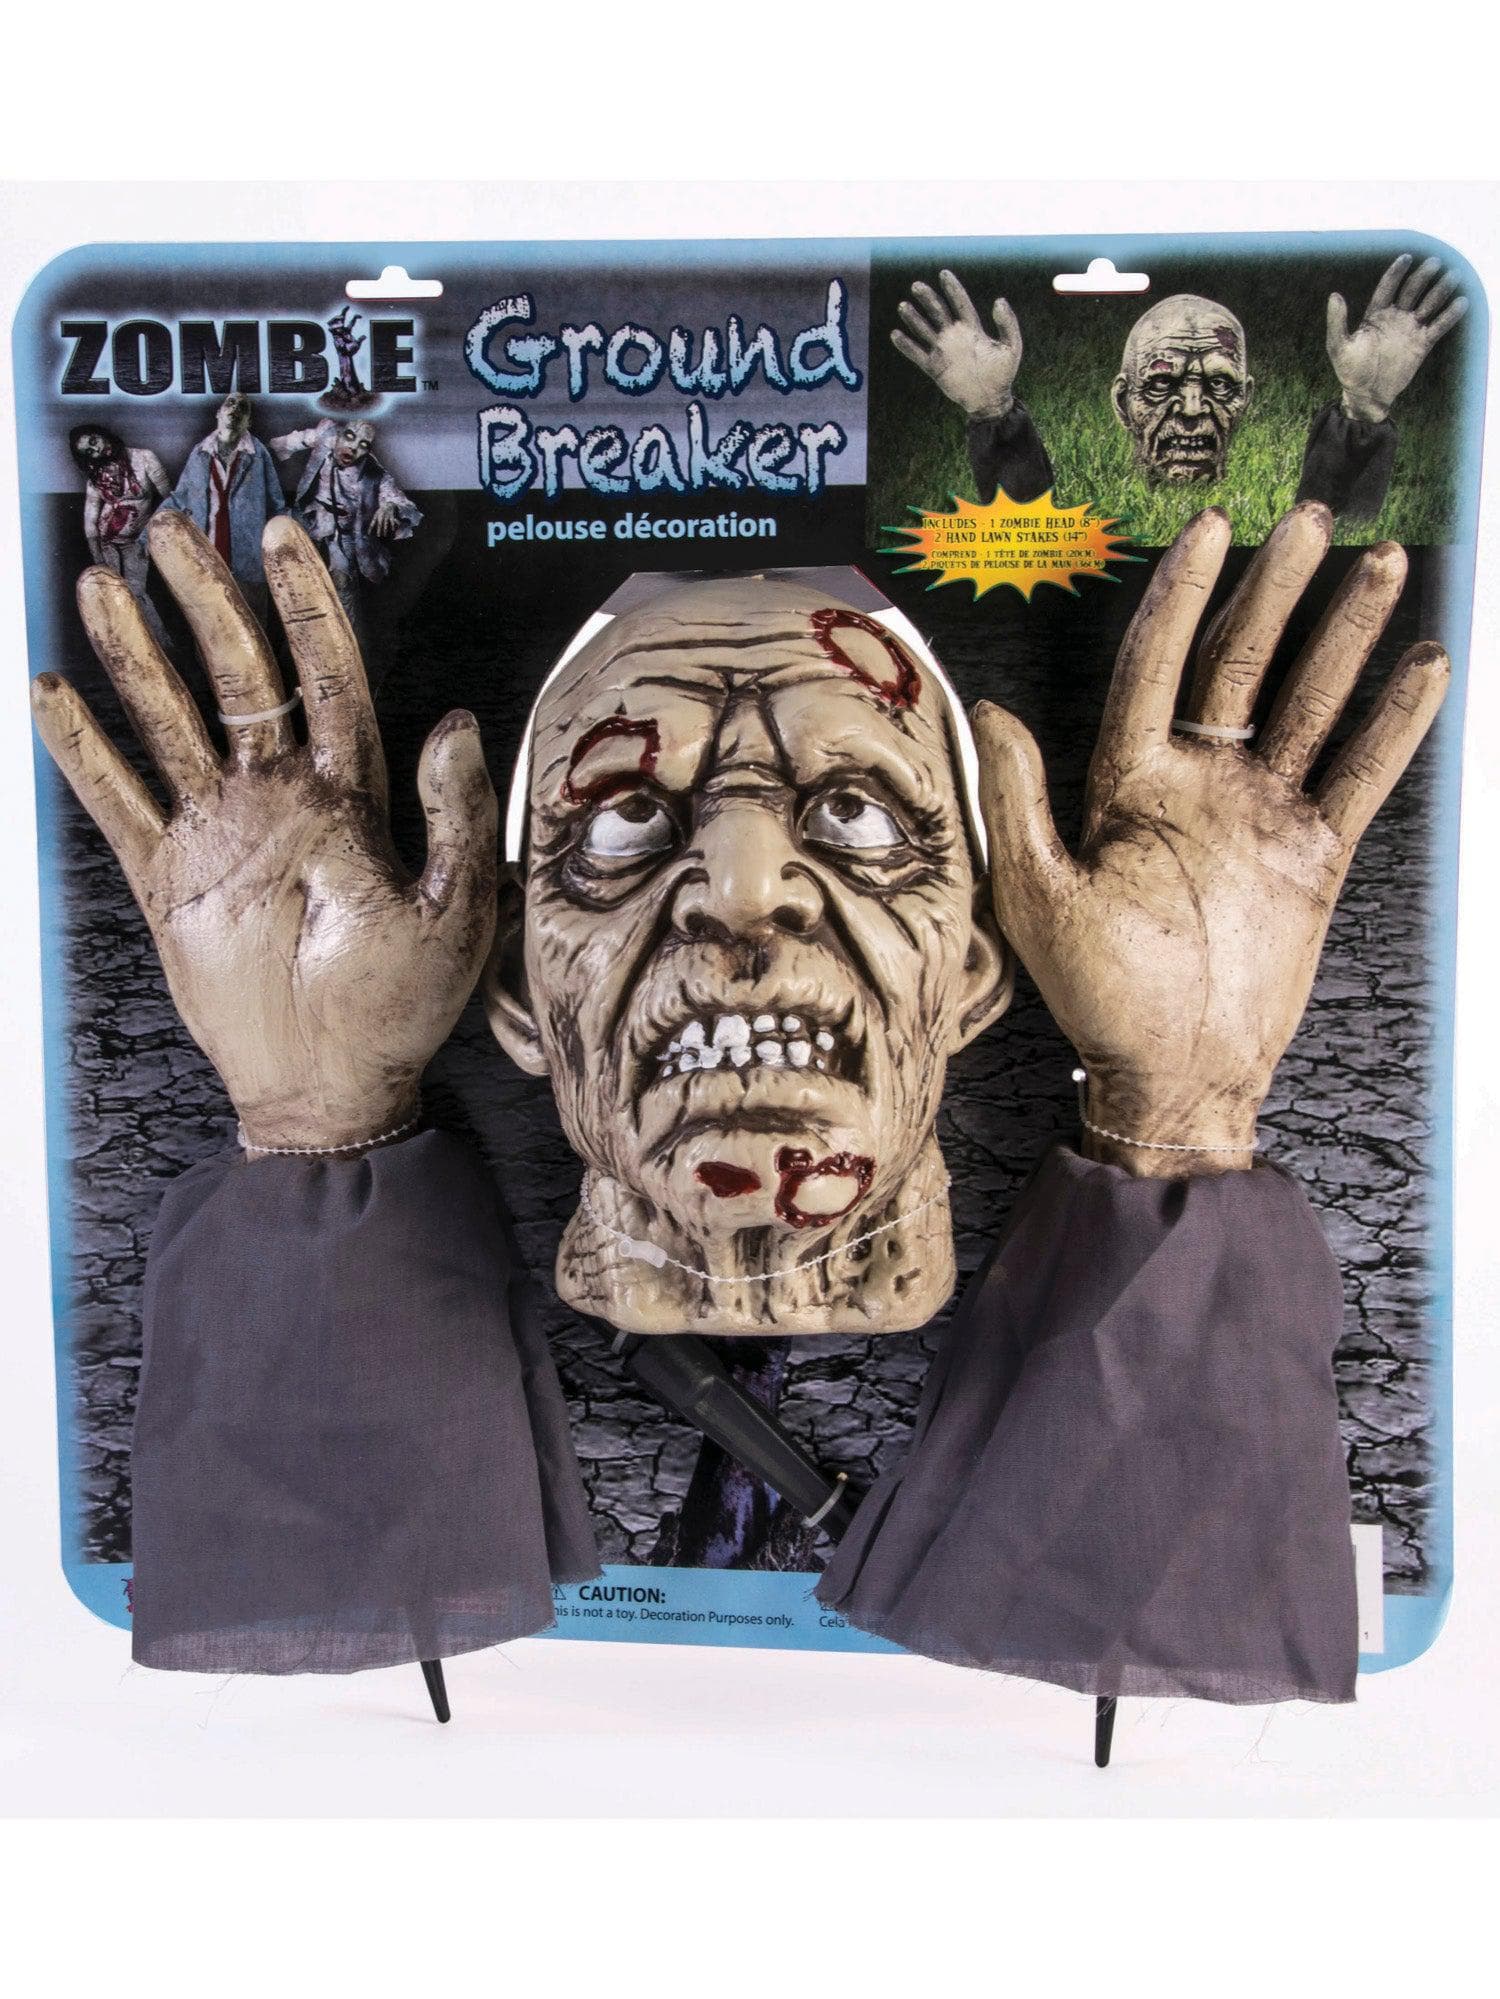 Zombie Groundbreaker Lawn Stakes - costumes.com